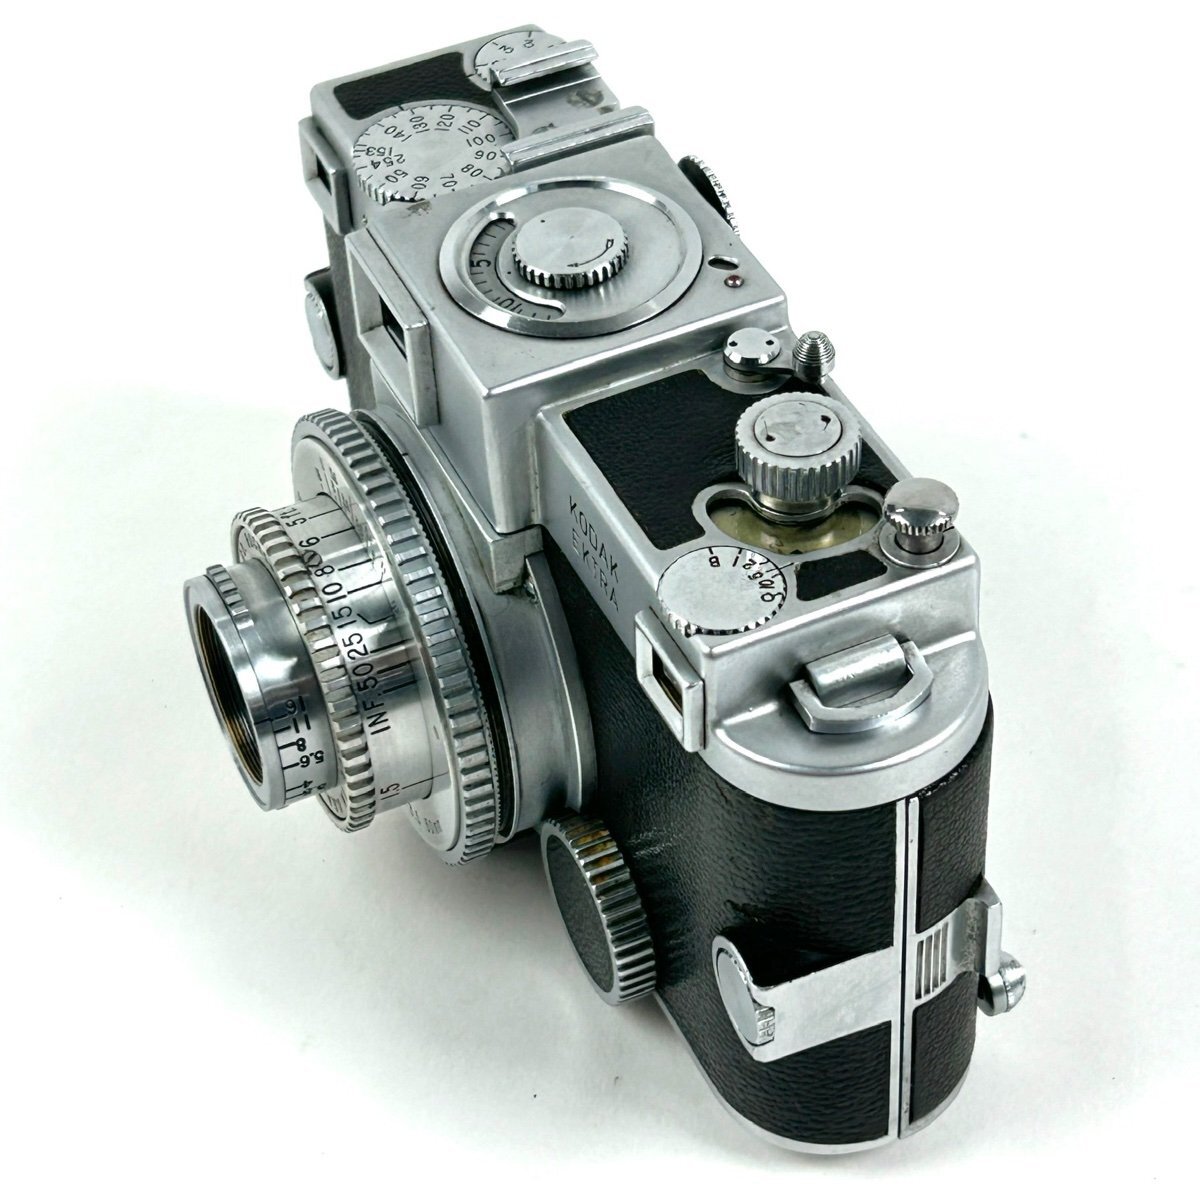 ko Duck Kodak EKTRA + 50mm F3.5 [ junk ] film range finder camera [ used ]